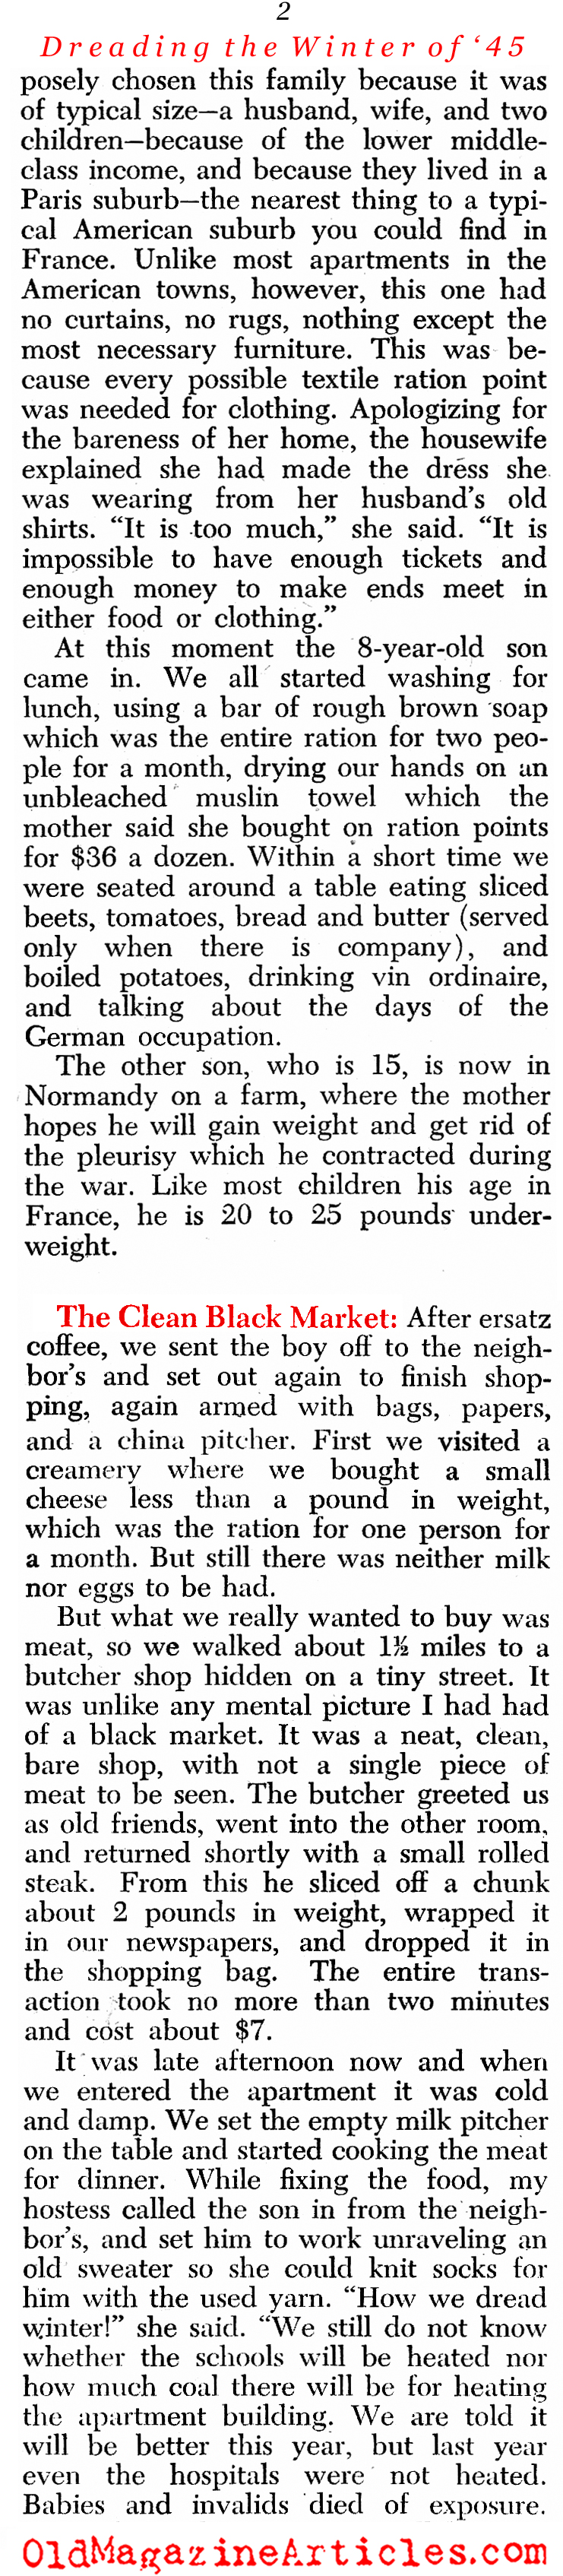 Dreading the Winter (Newsweek Magazine, 1945)